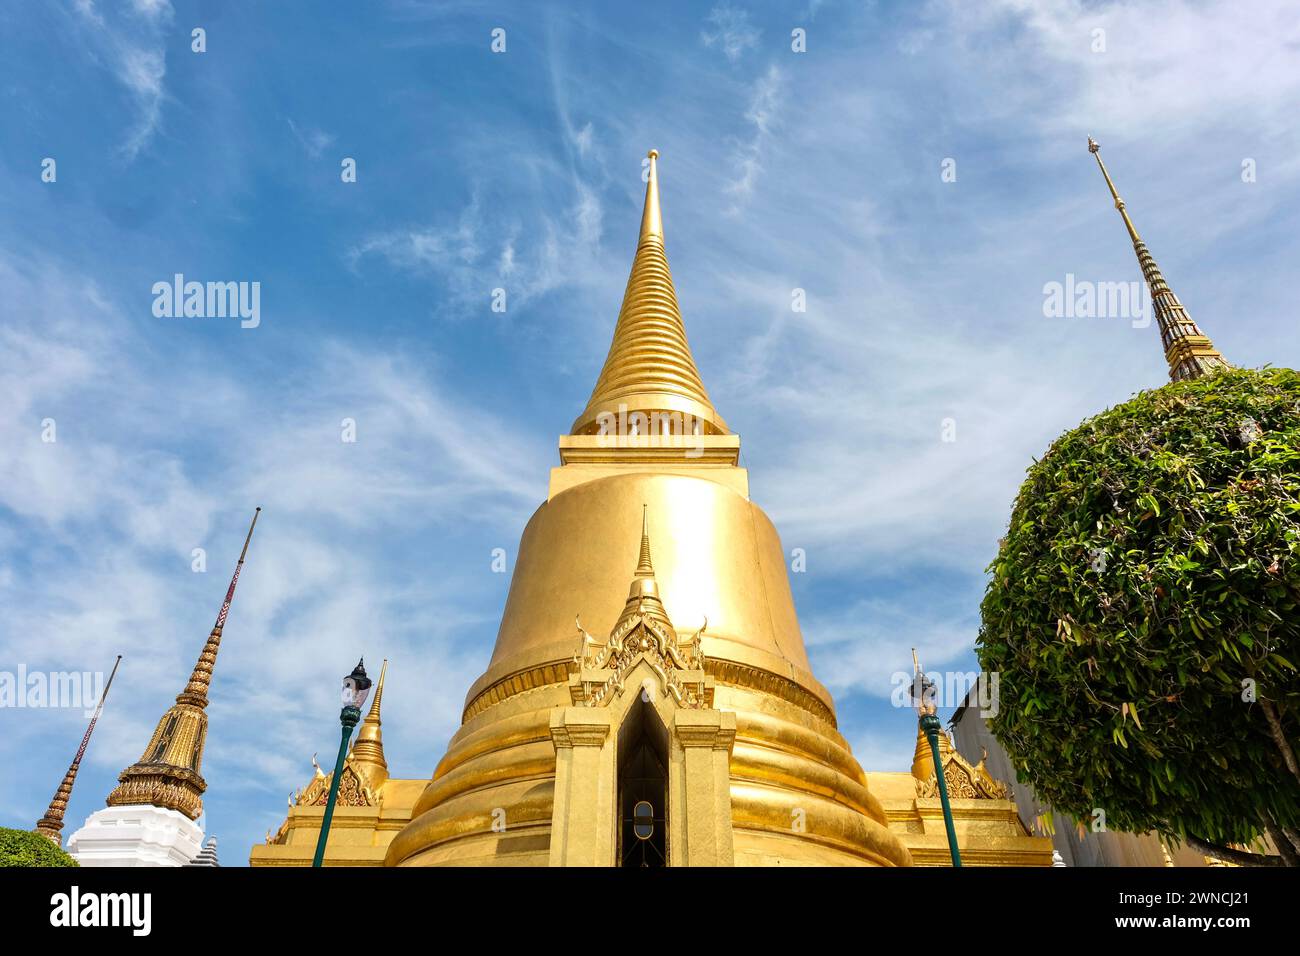 Phra Si Rattana Chedi: Eine goldene glockenförmige Stupa am Wat Phra Kaew (Tempel des Smaragdbuddhas), die Reliquien des Buddha aus Sri Lanka beherbergt Stockfoto